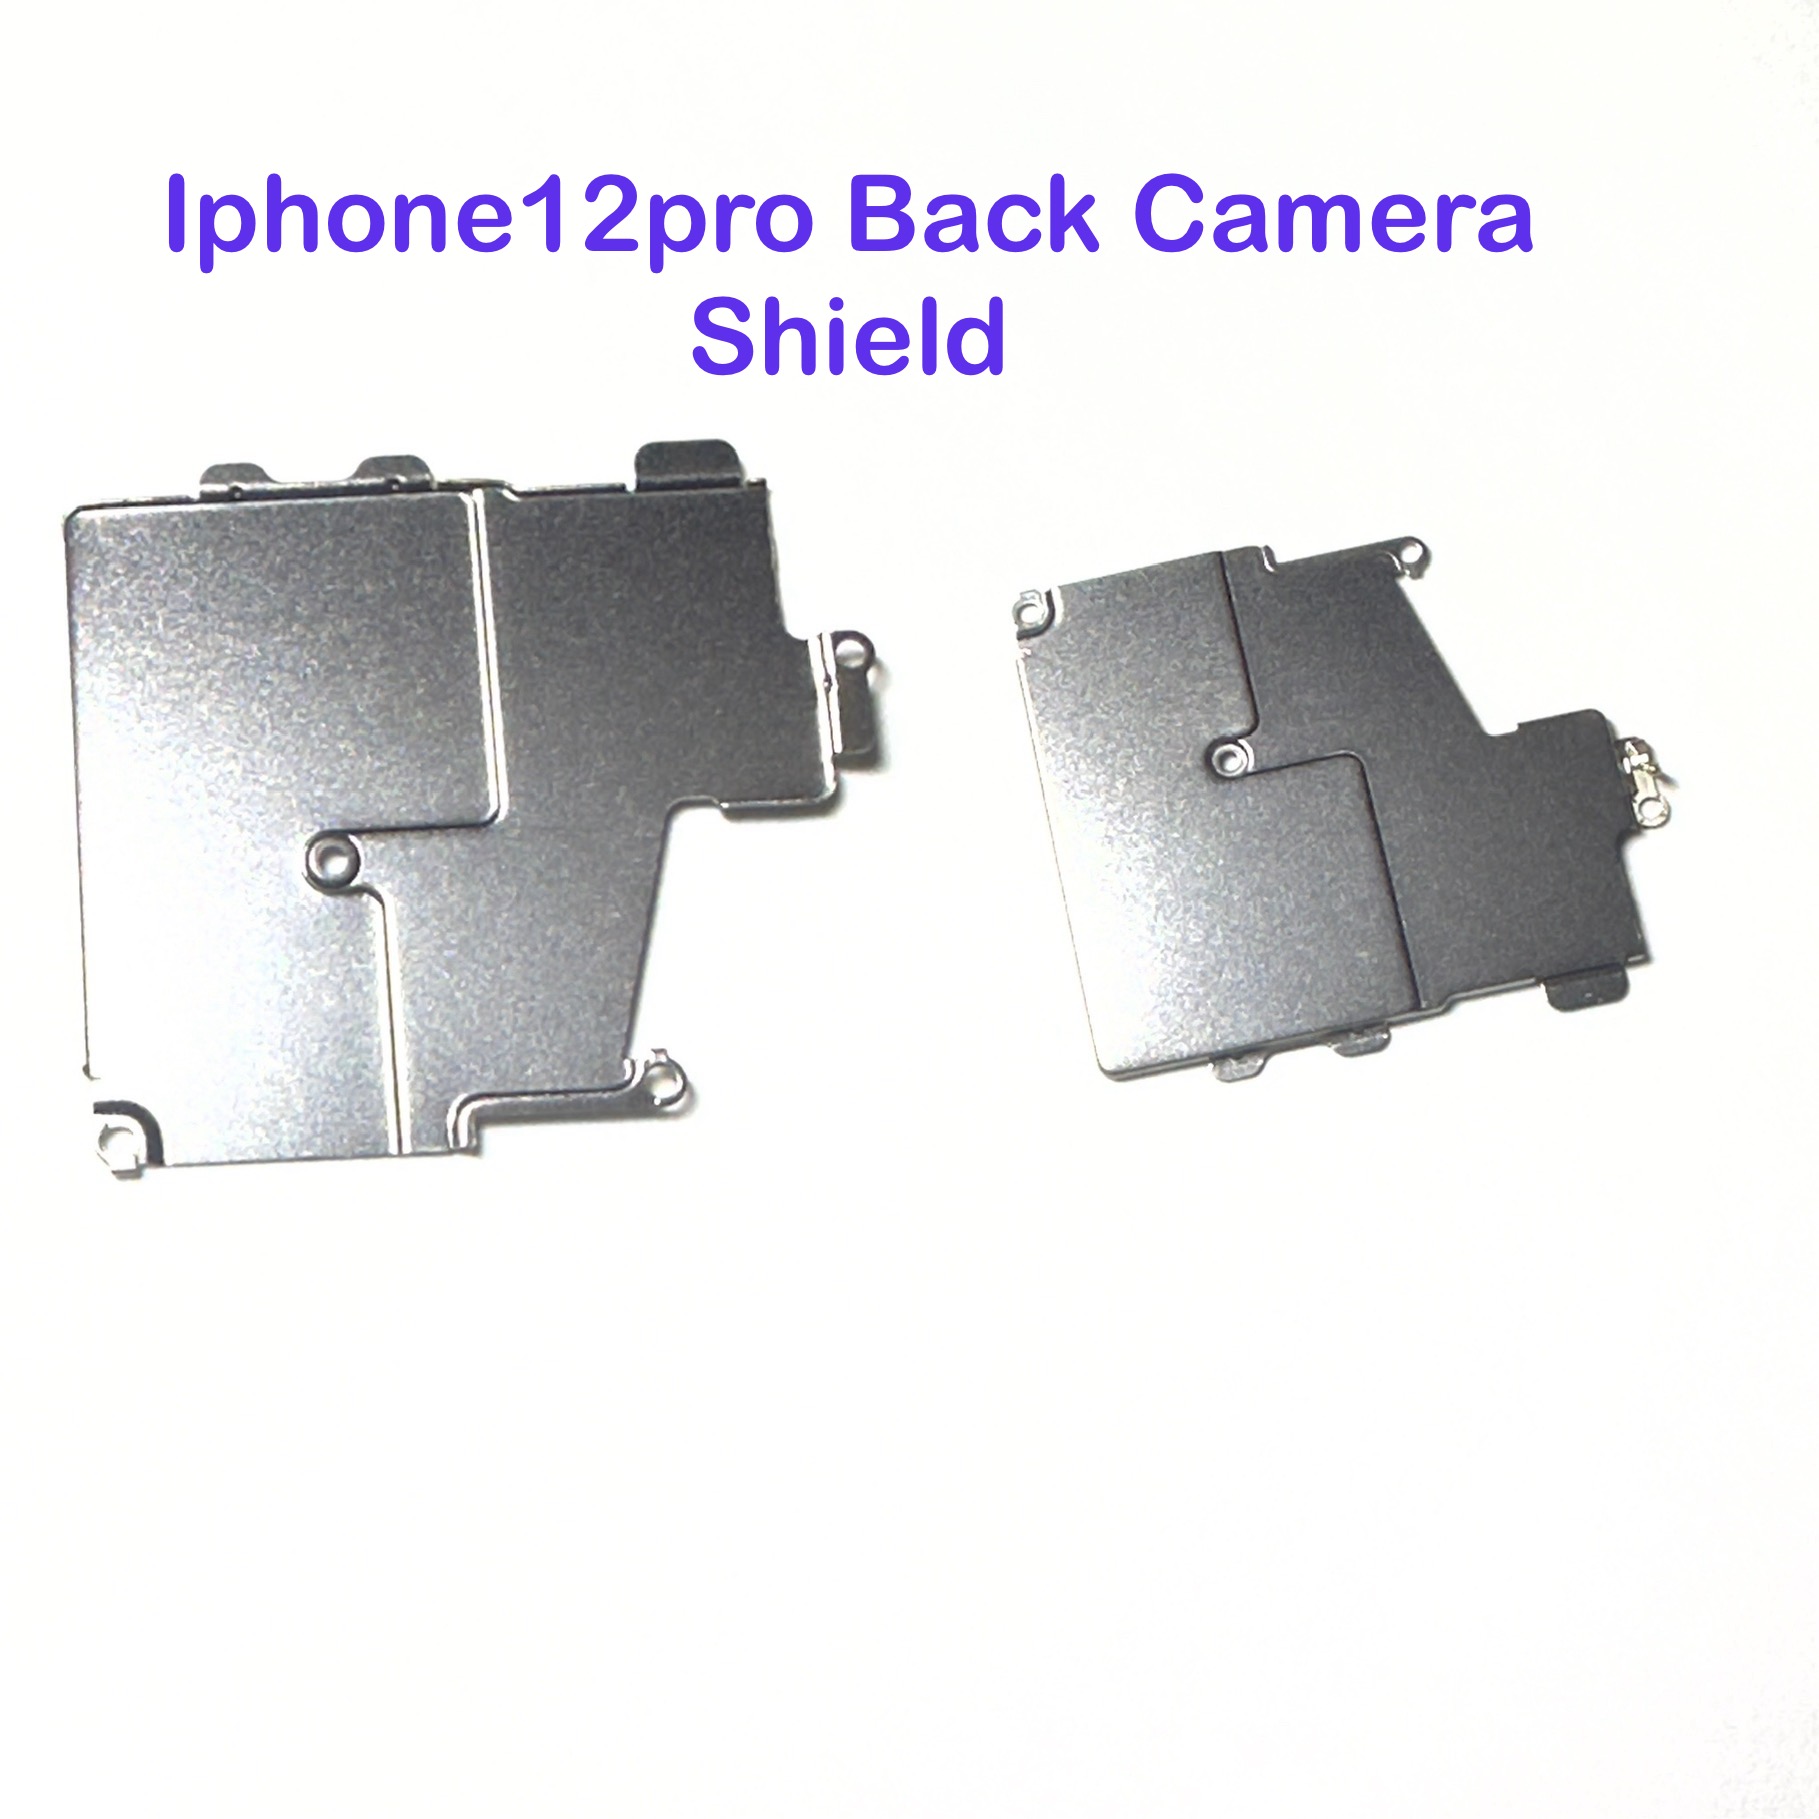 iphone12pro back camera shield